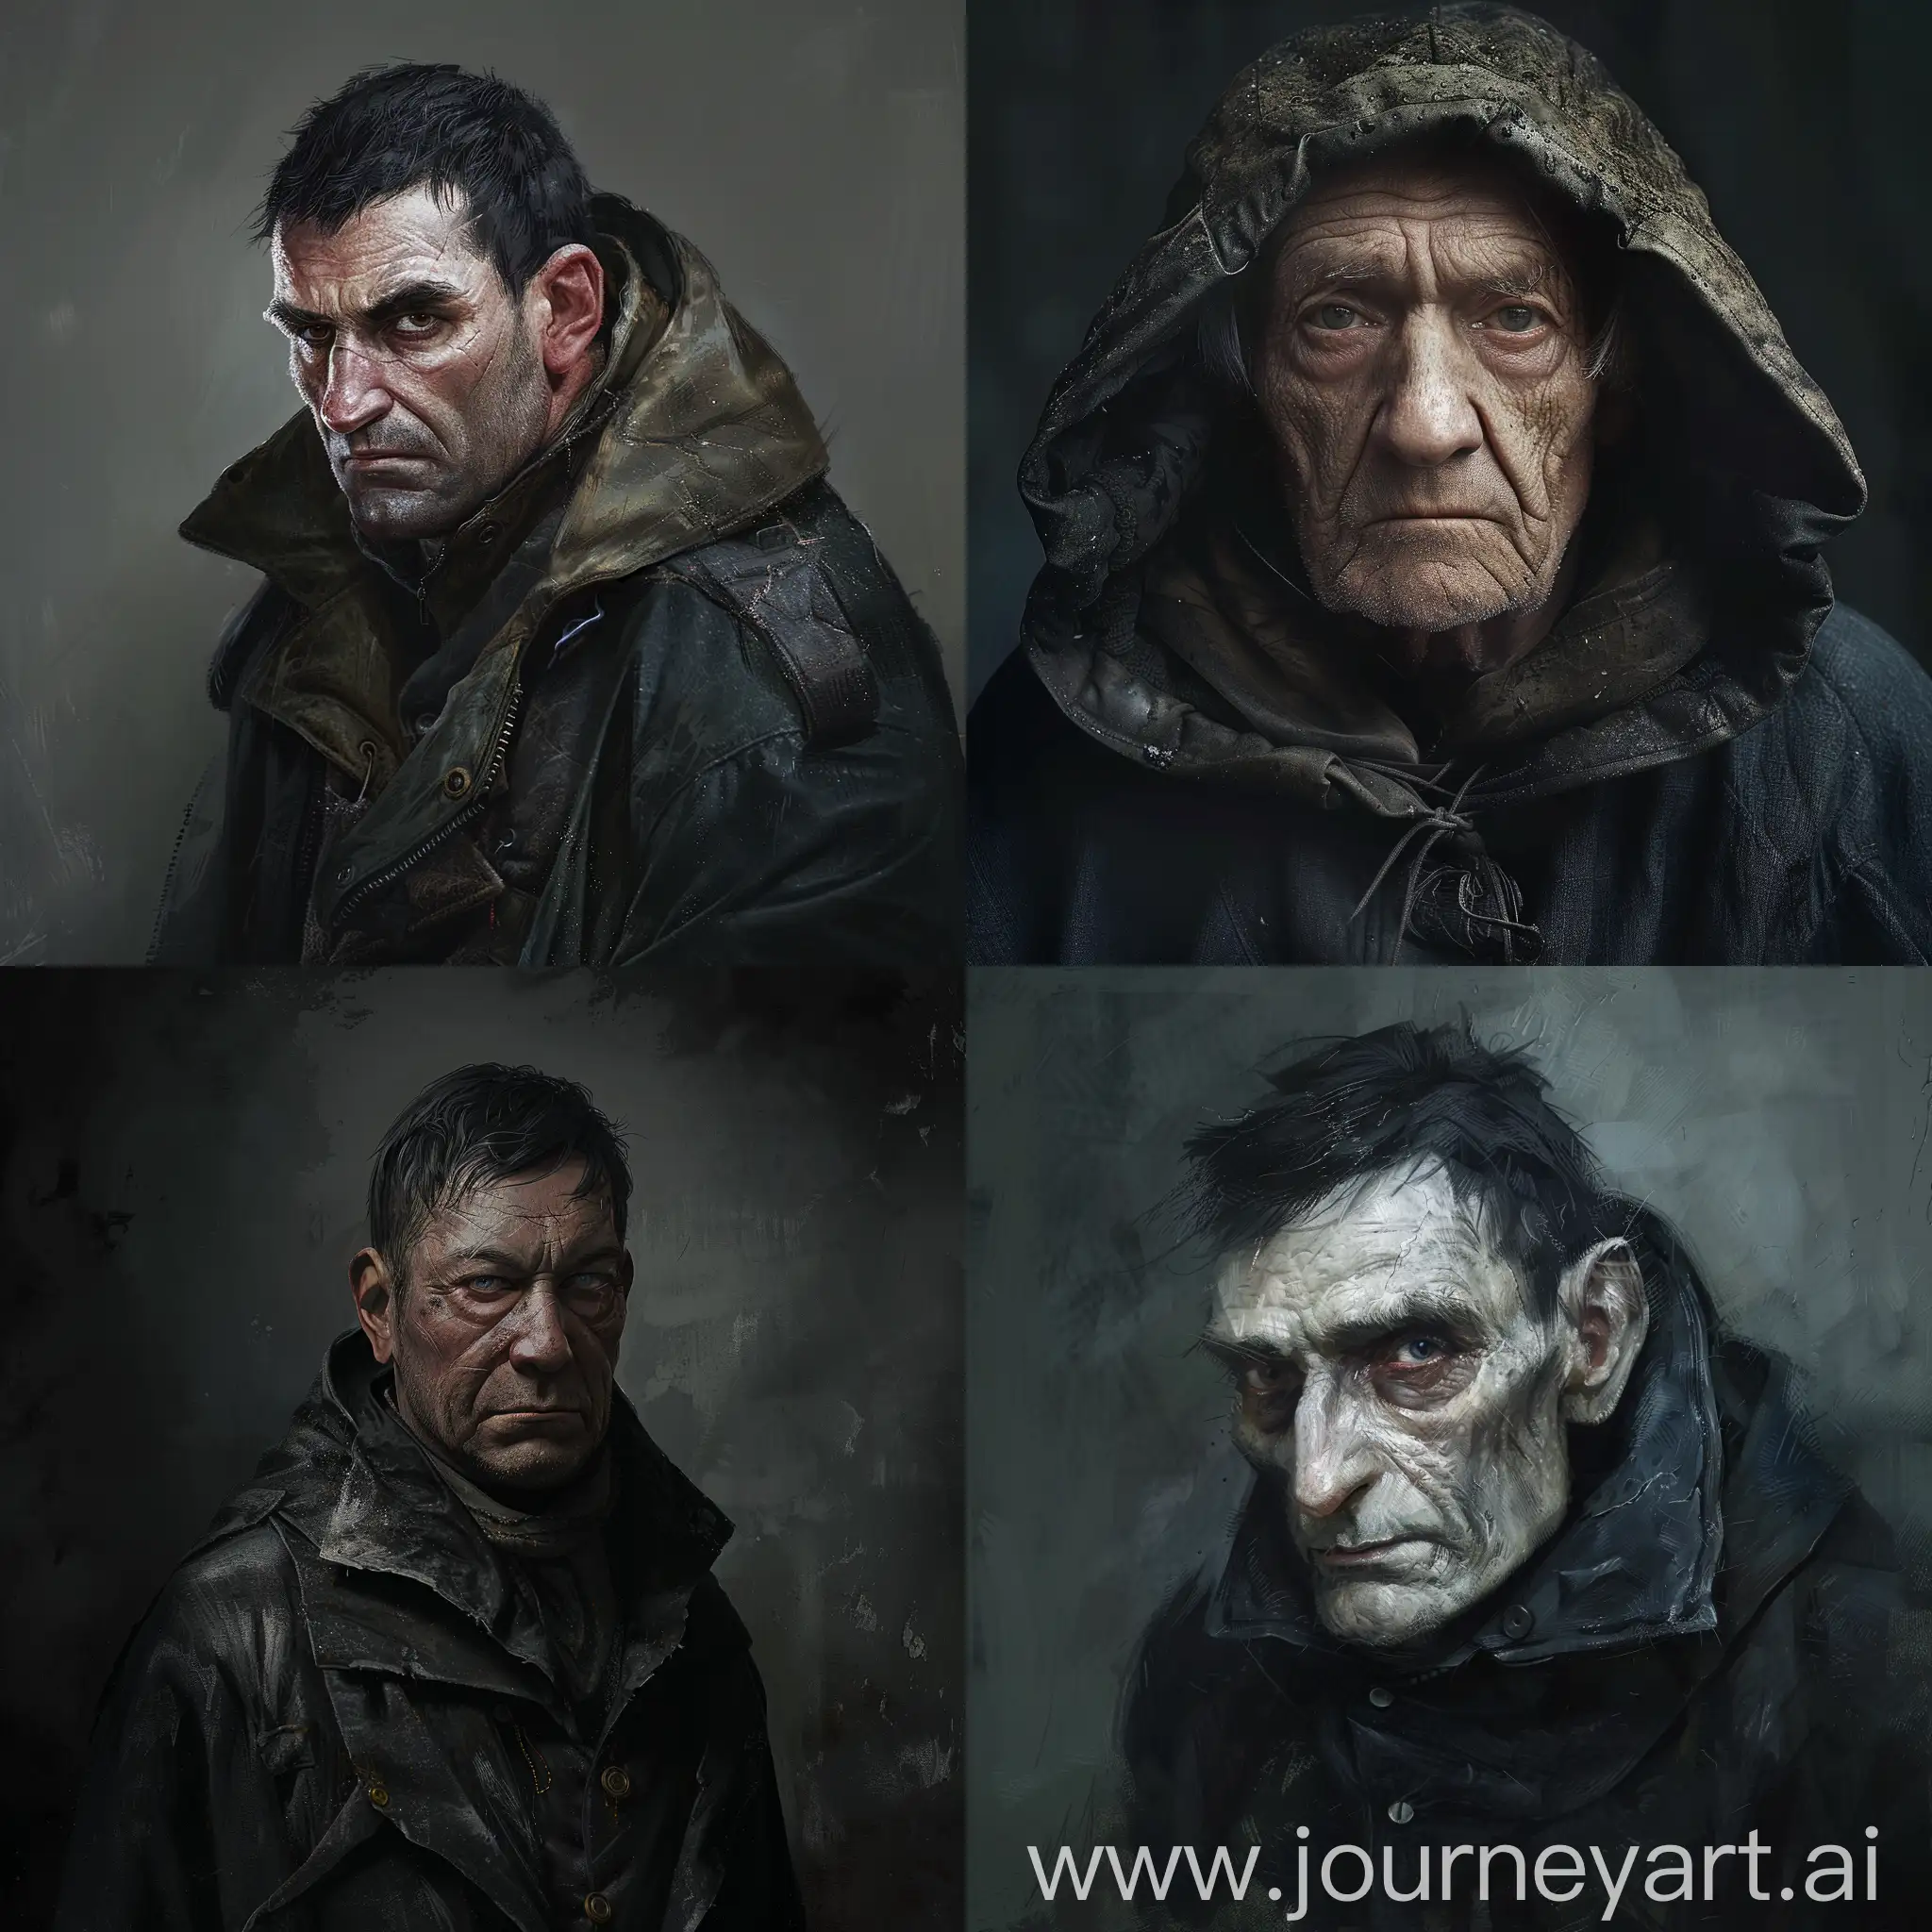 SternLooking-Man-in-Worn-Black-Raincoat-Reflective-Eyes-Portrait